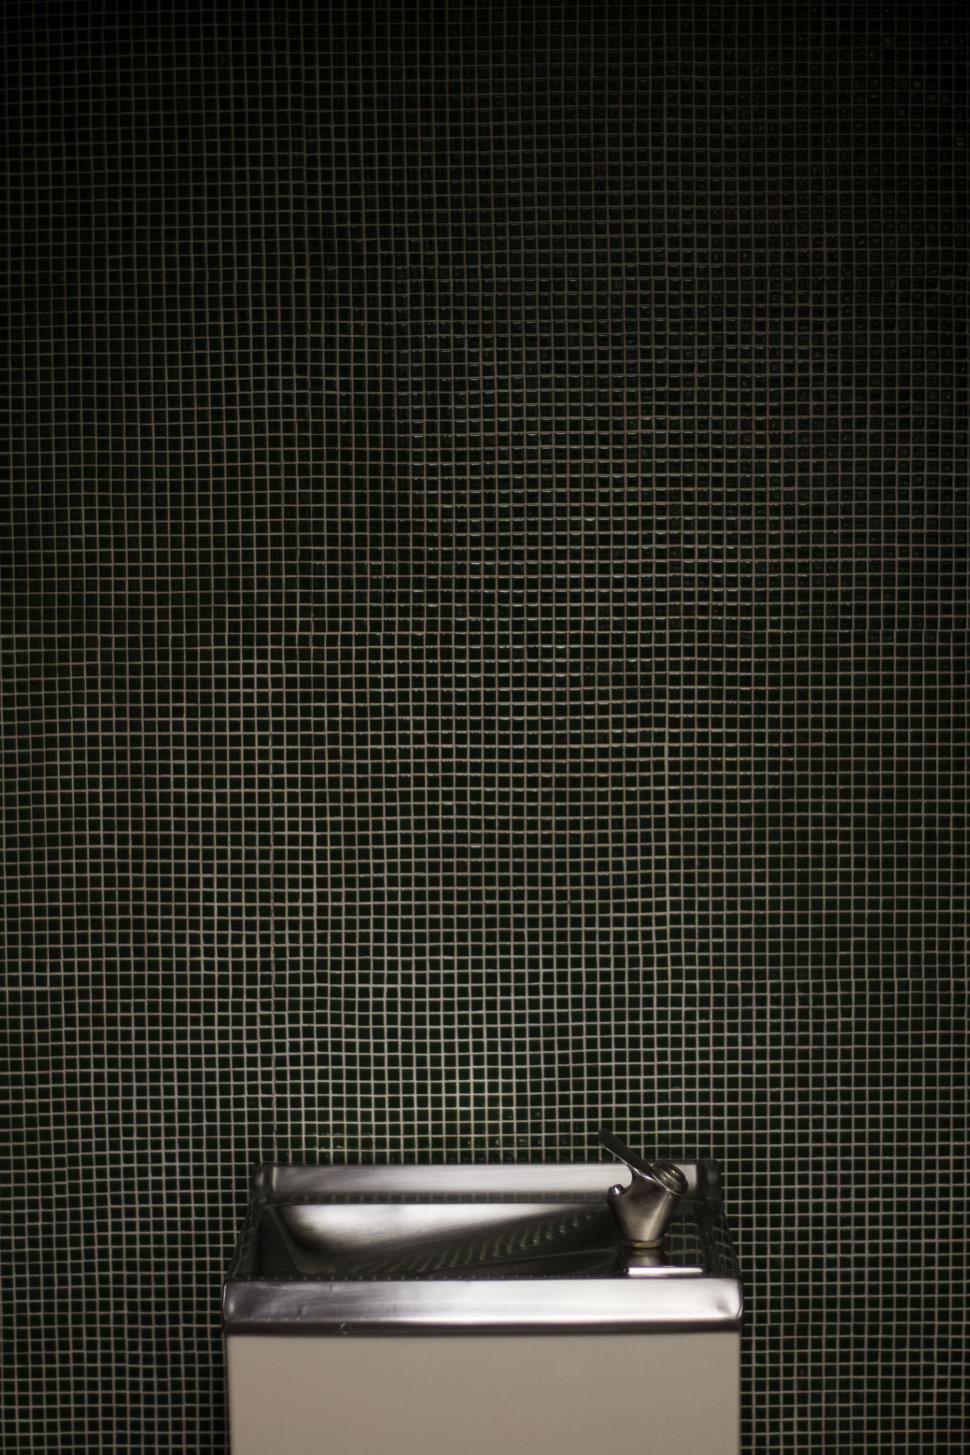 Free Image of Metal Urinal on Tiled Floor 